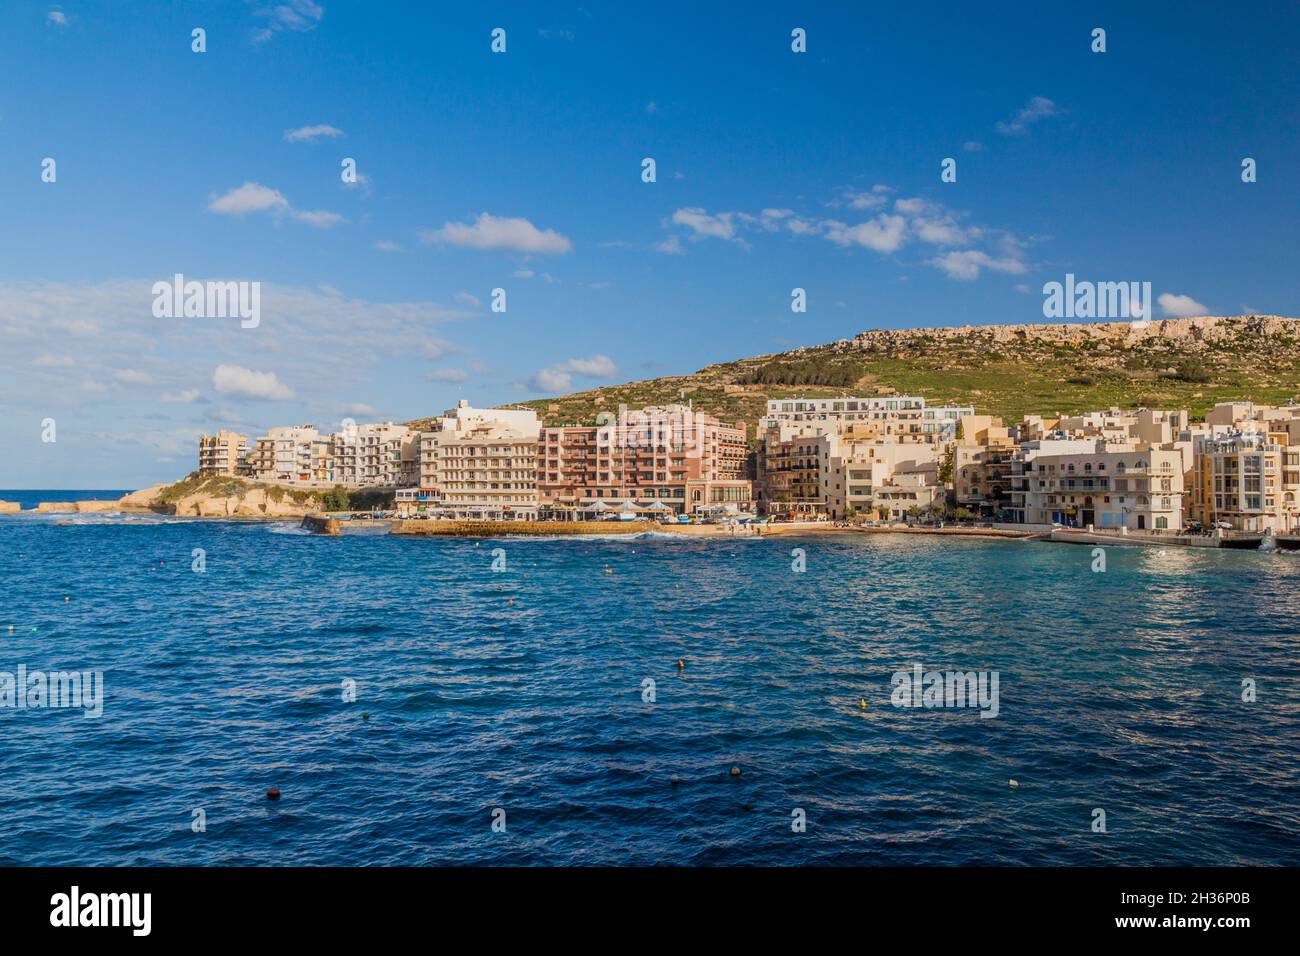 View of Marsalforn Bay on Gozo island, Malta Stock Photo